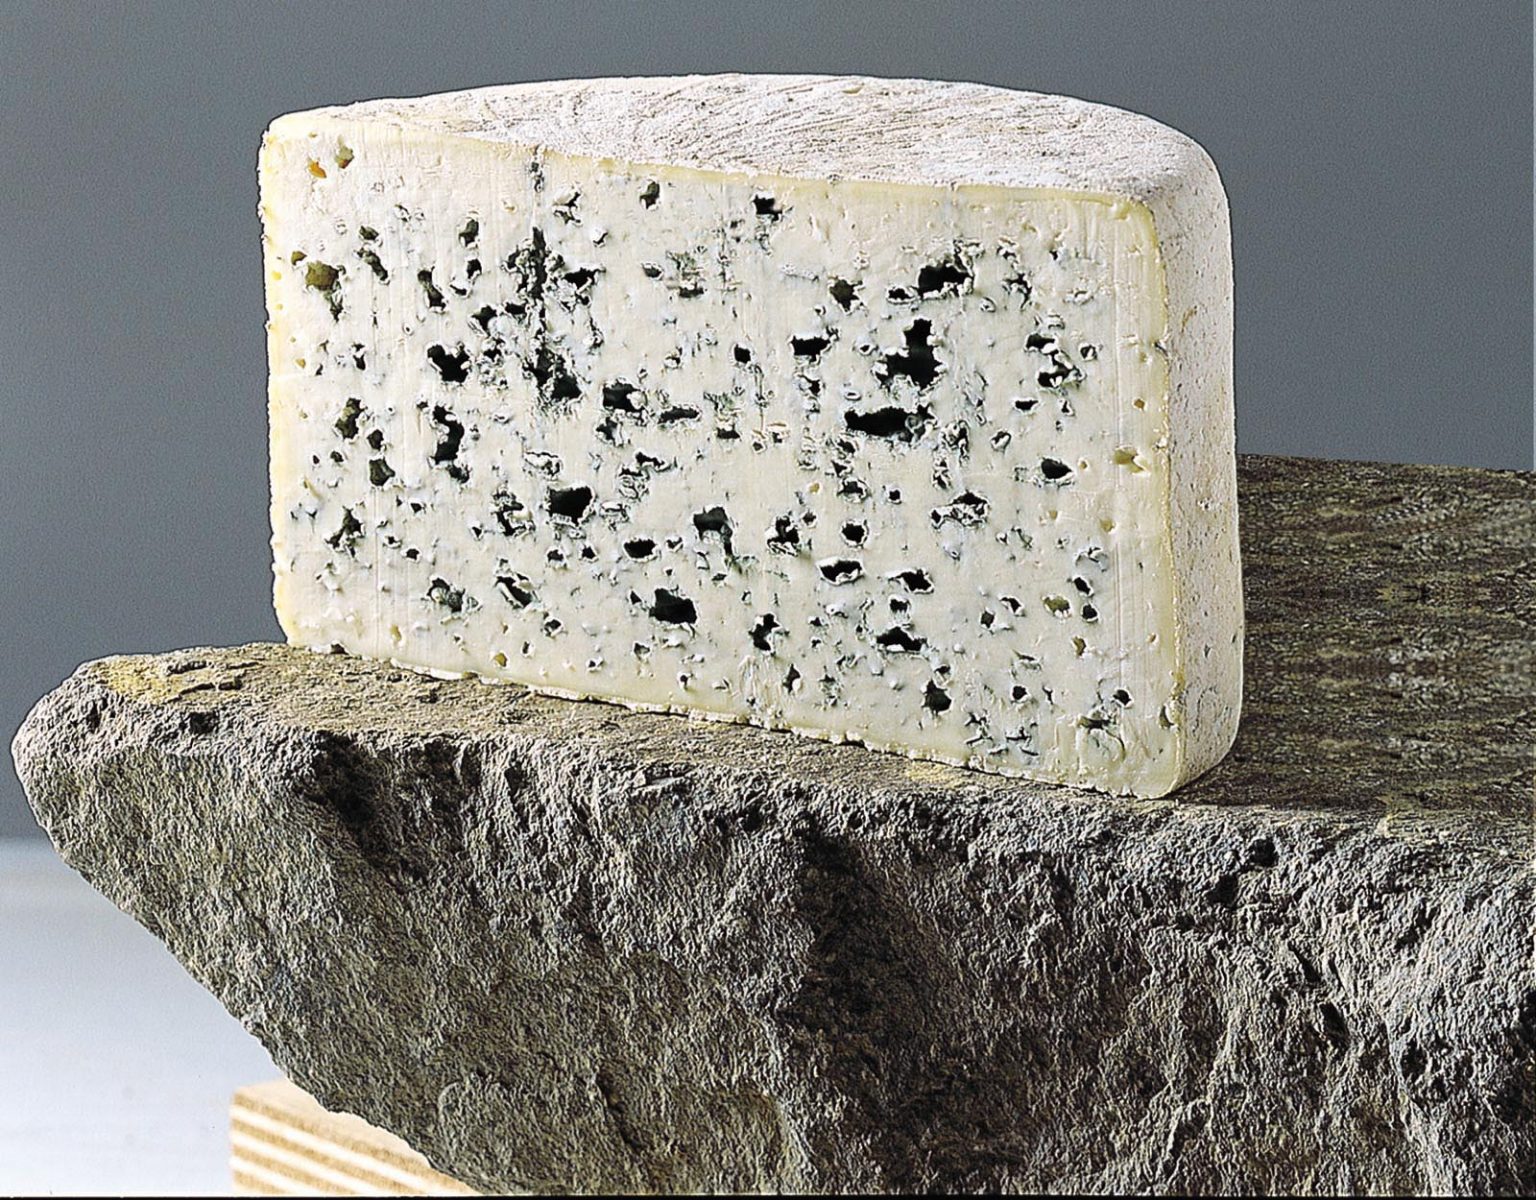 Bleu Dauvergne Aop Cheese On Wheels 